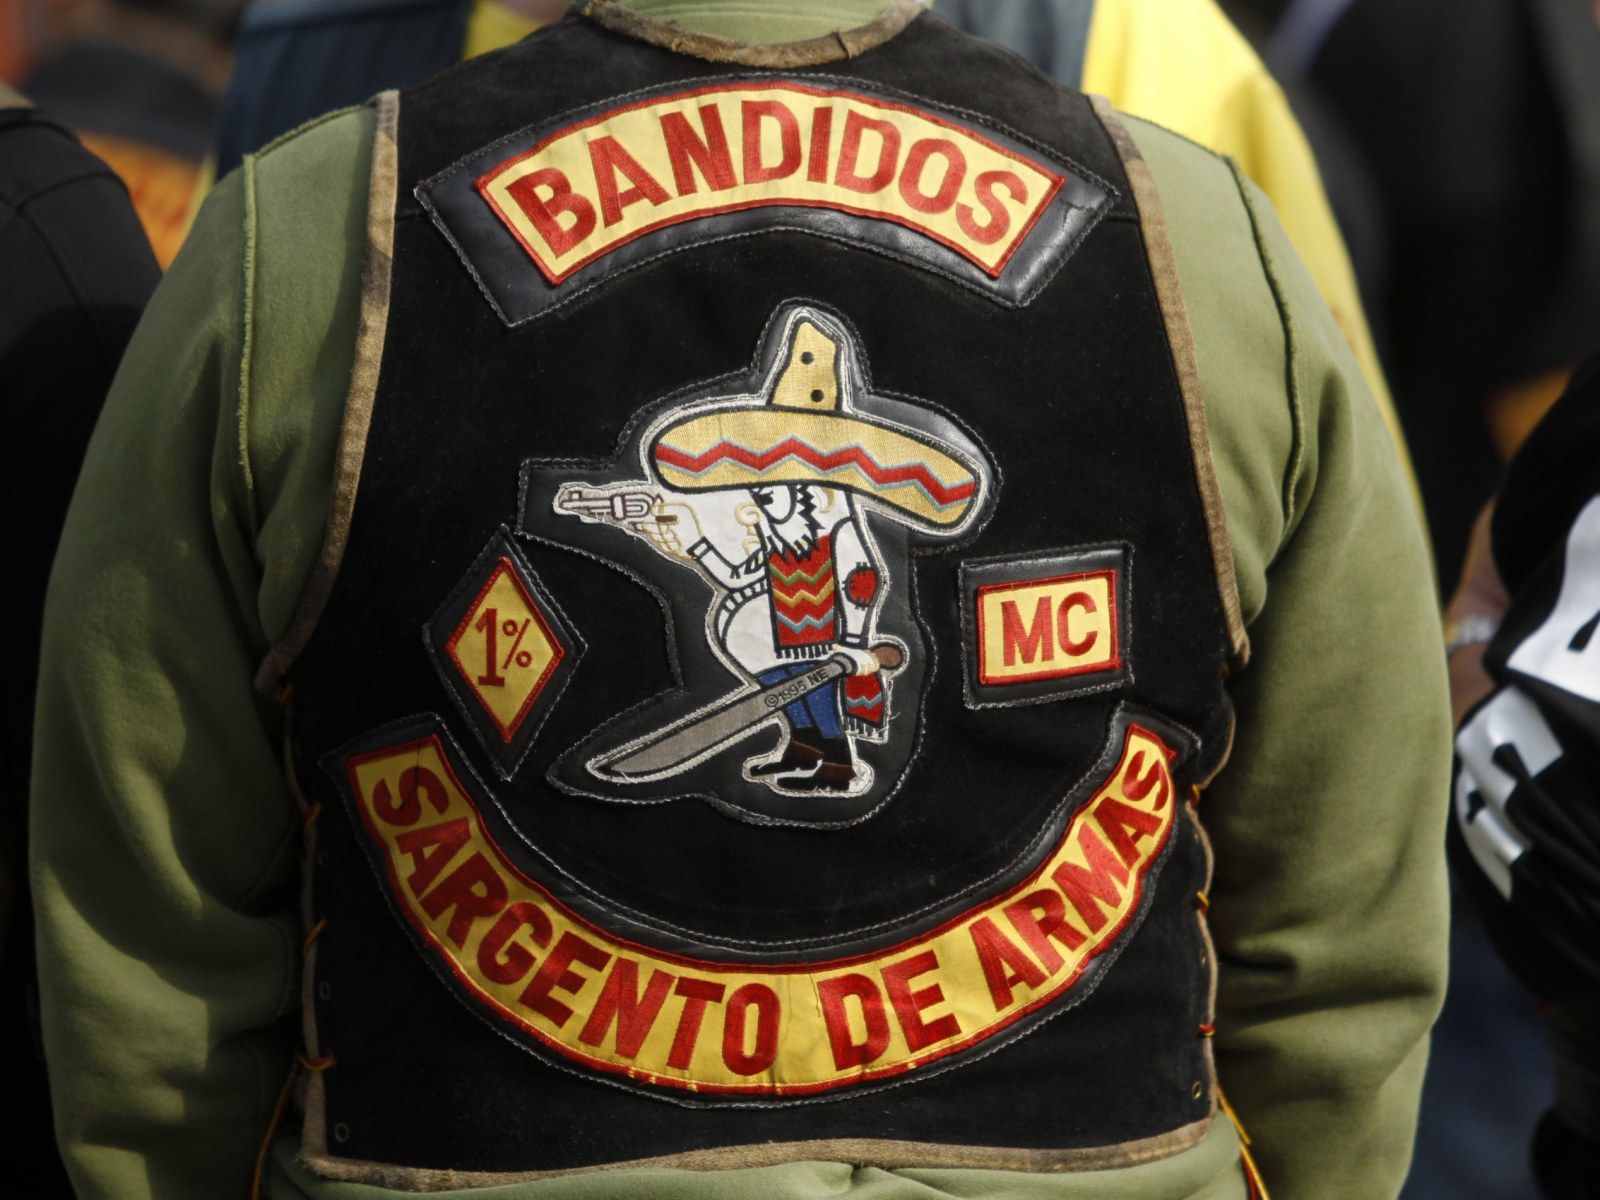 bandido motorcycle gang